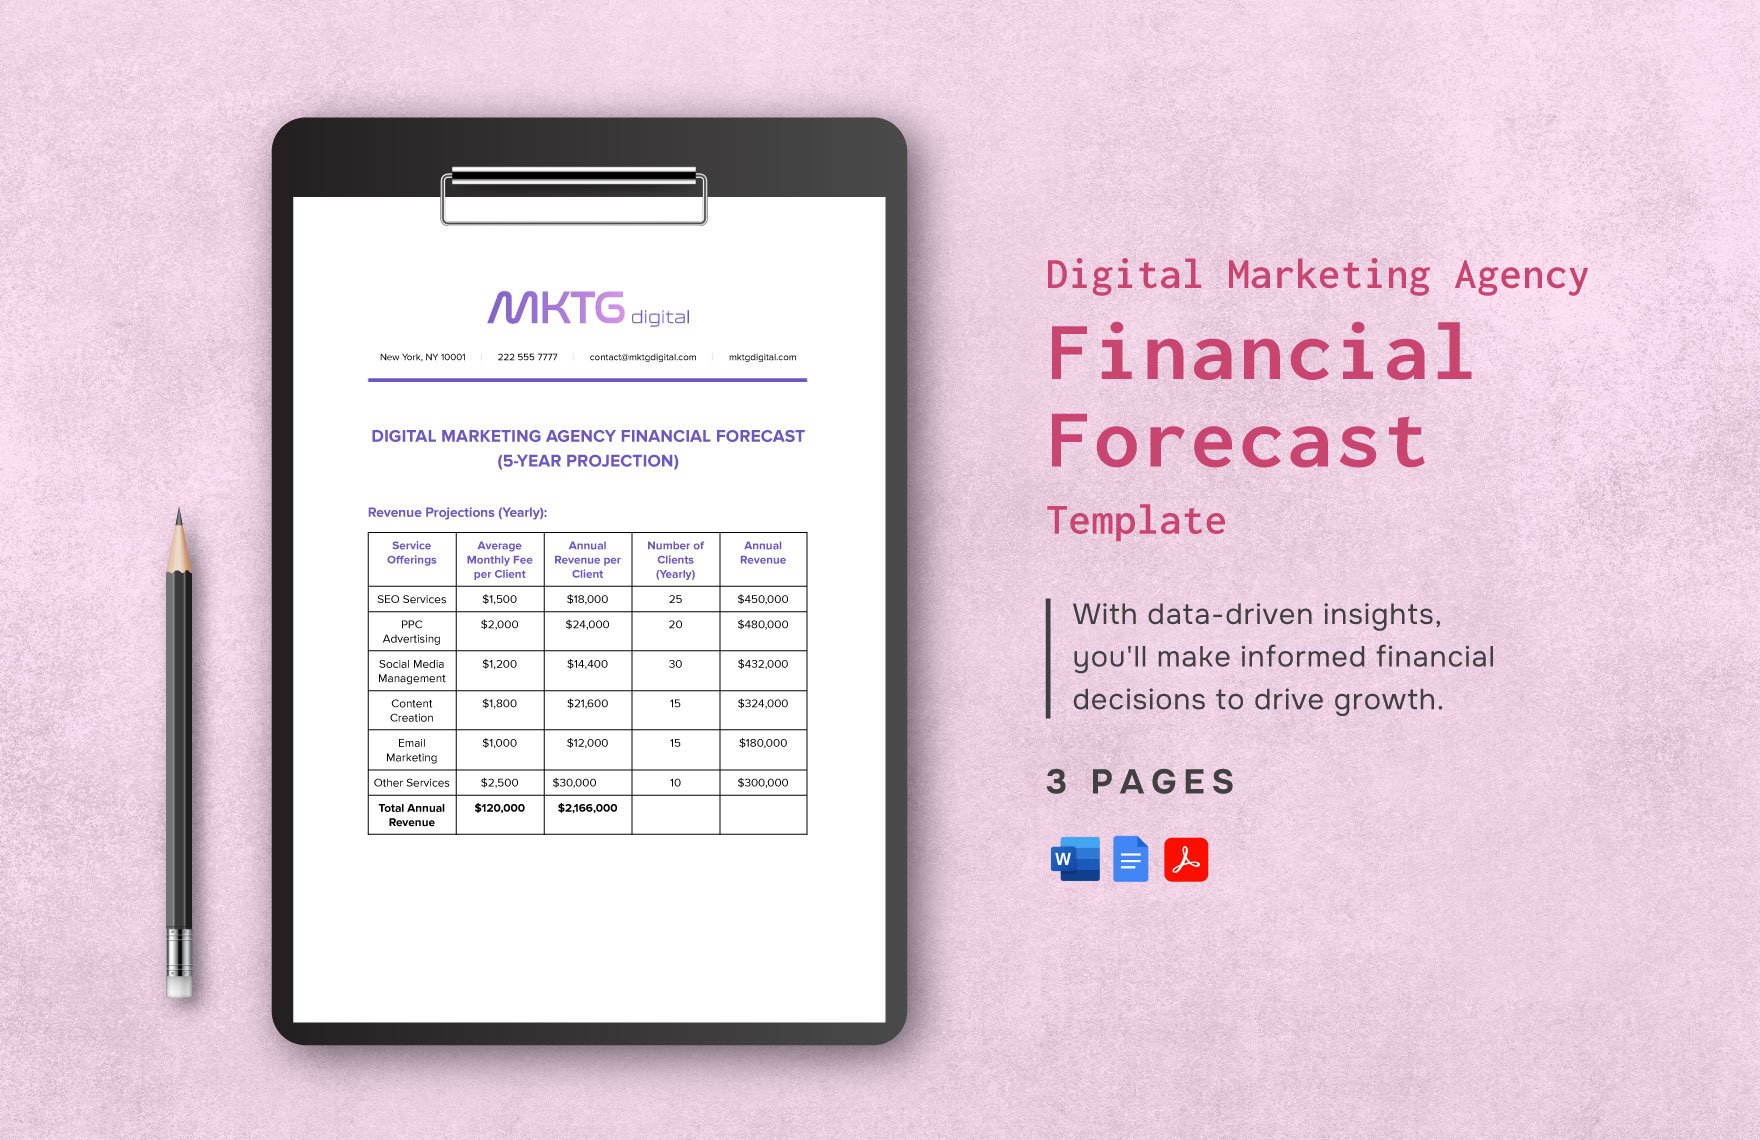 Digital Marketing Agency Financial Forecast Template in Word, Google Docs, PDF